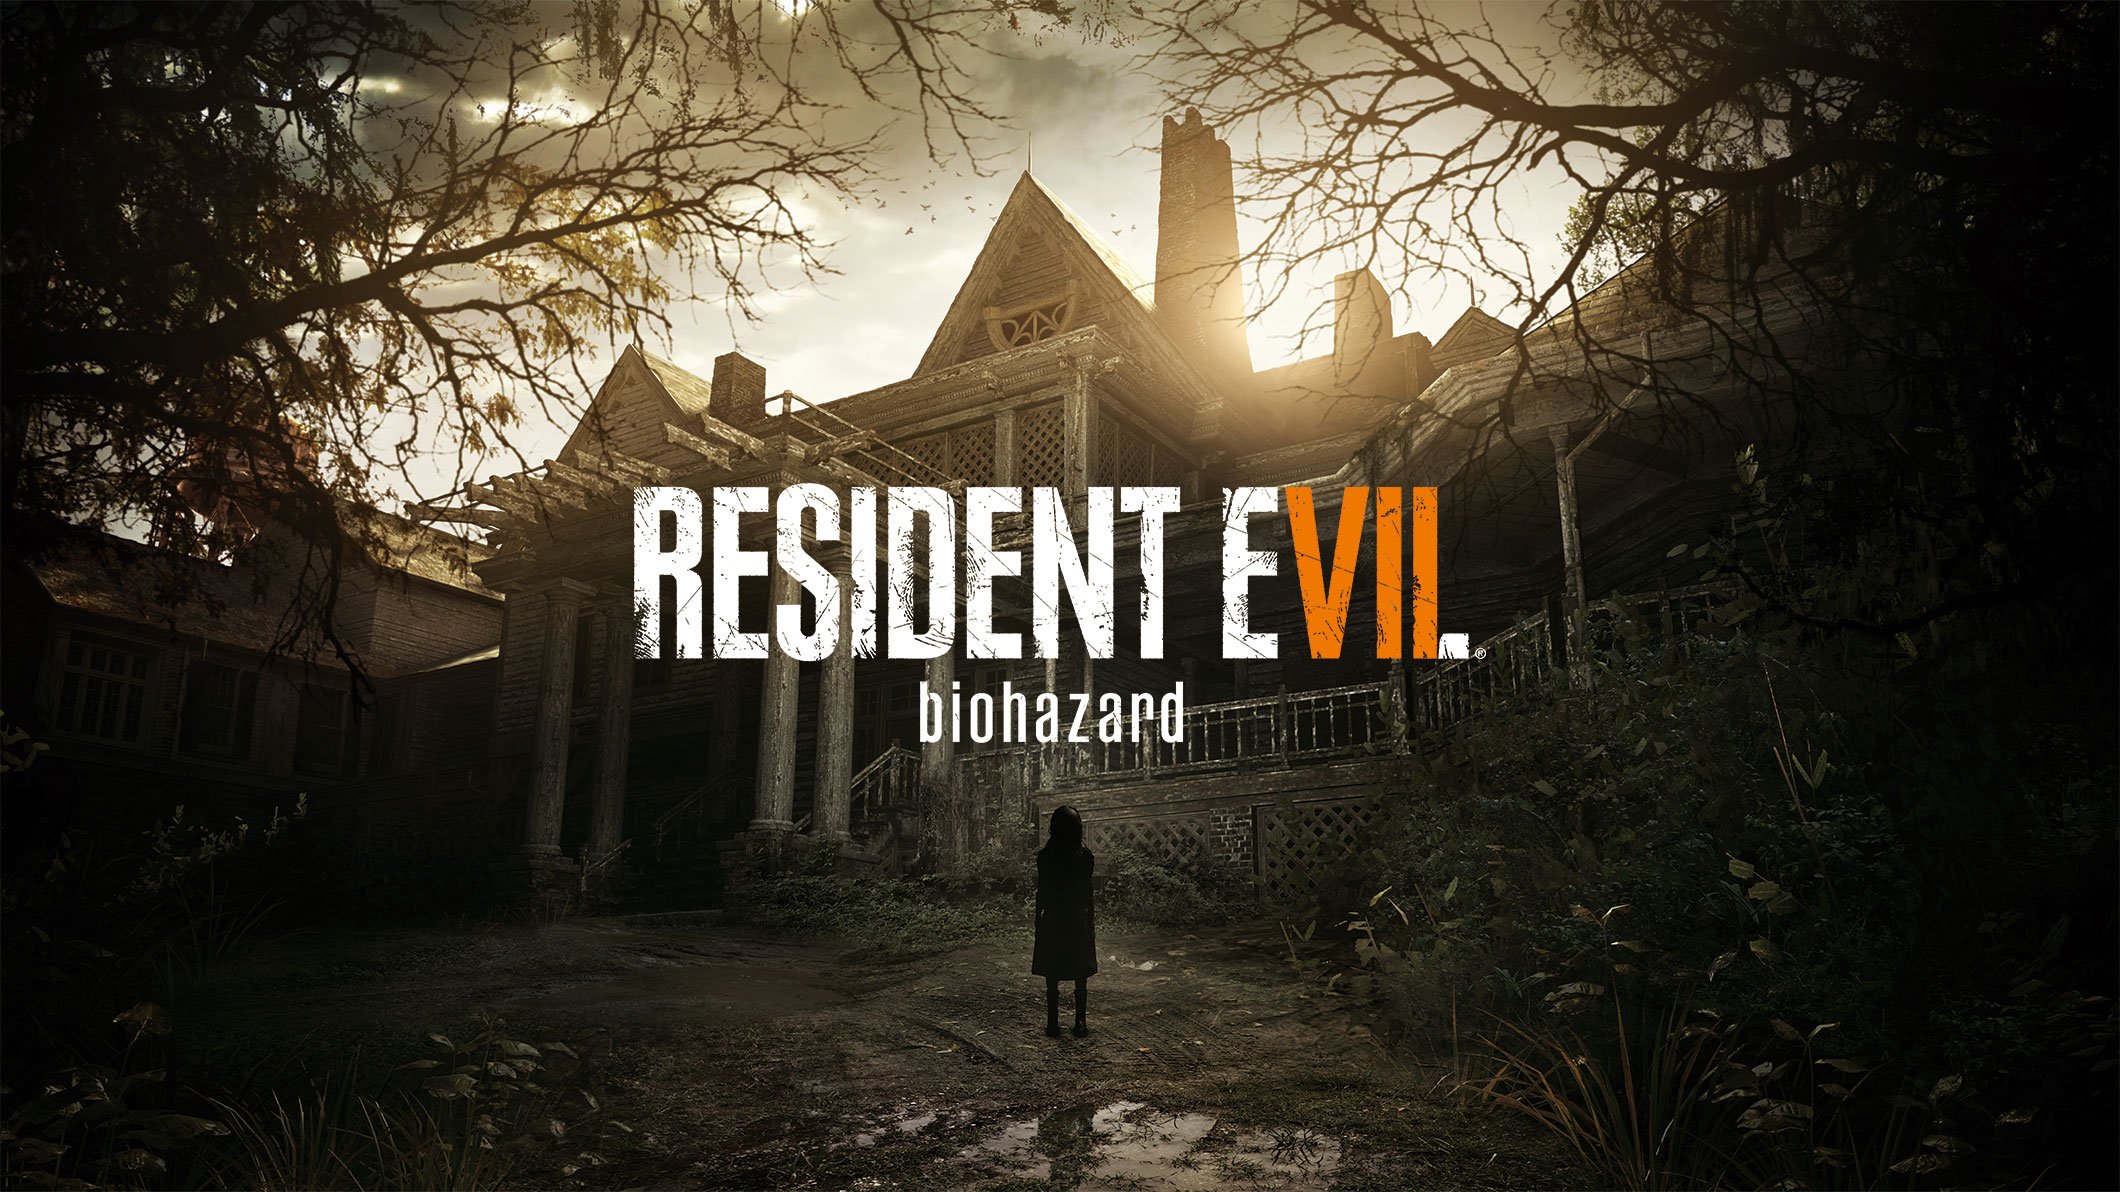 Resident Evil 7 biohazard - Часть 3